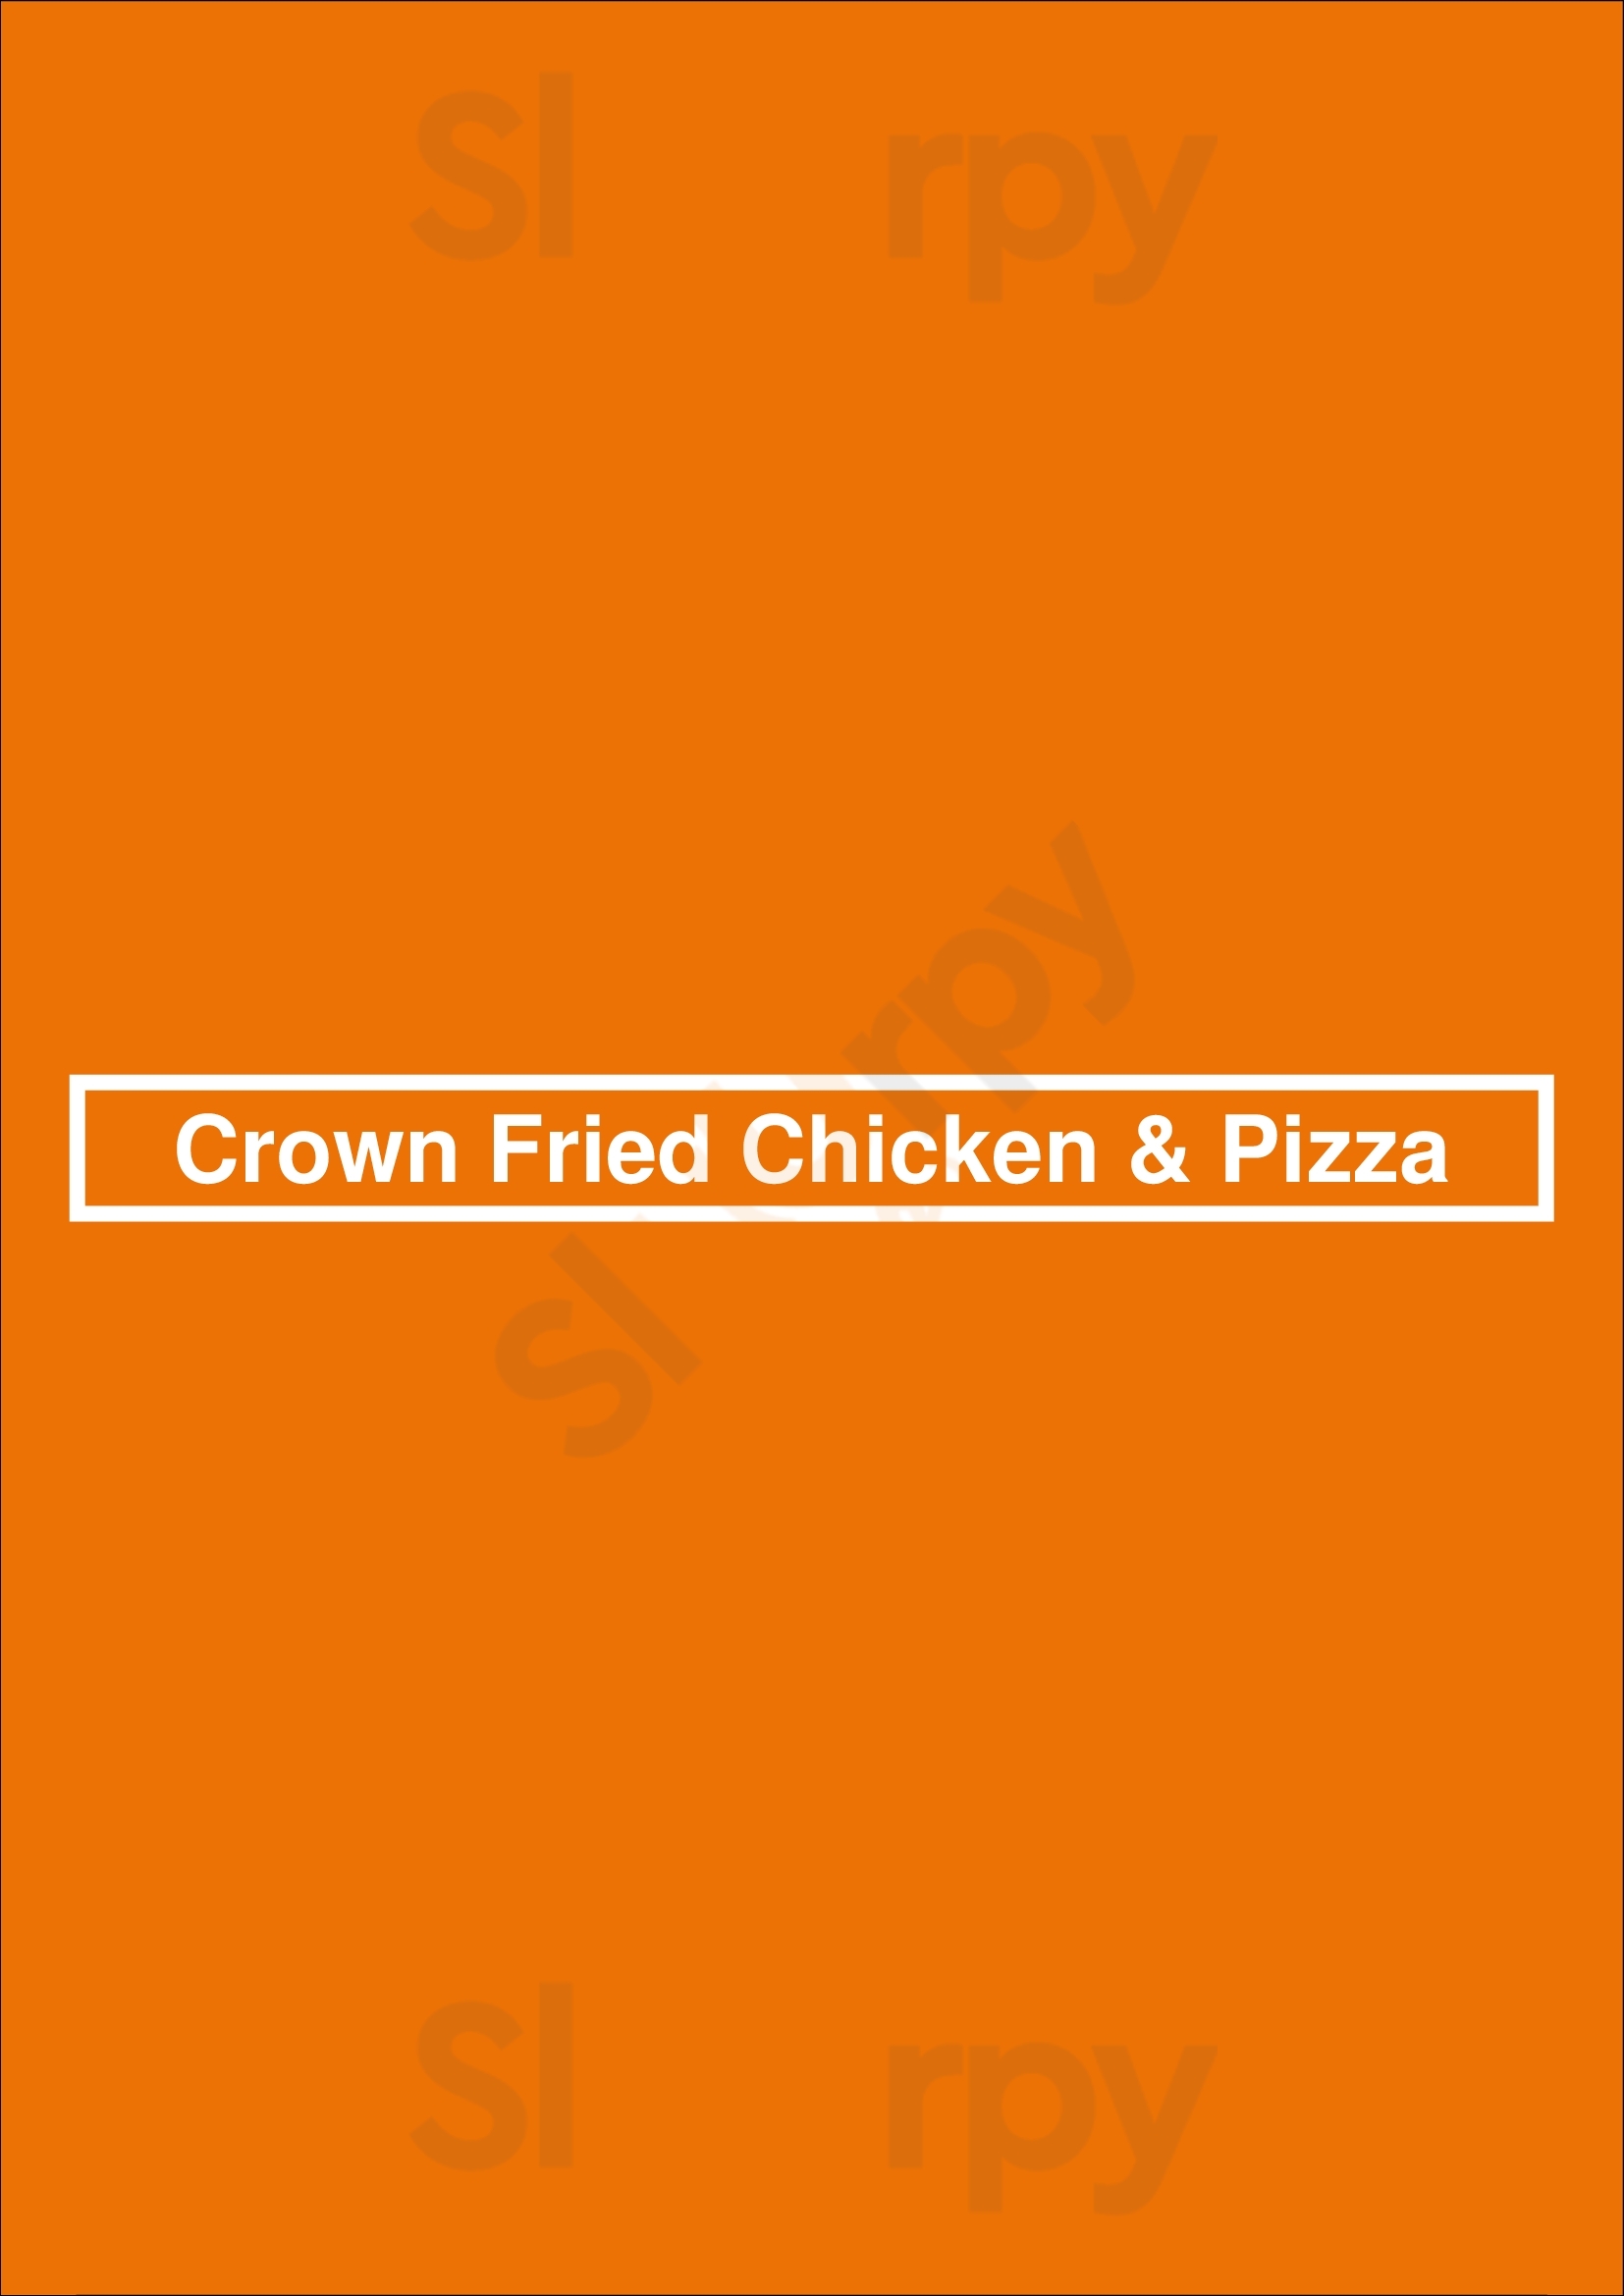 Crown Fried Chicken & Pizza Brooklyn Menu - 1